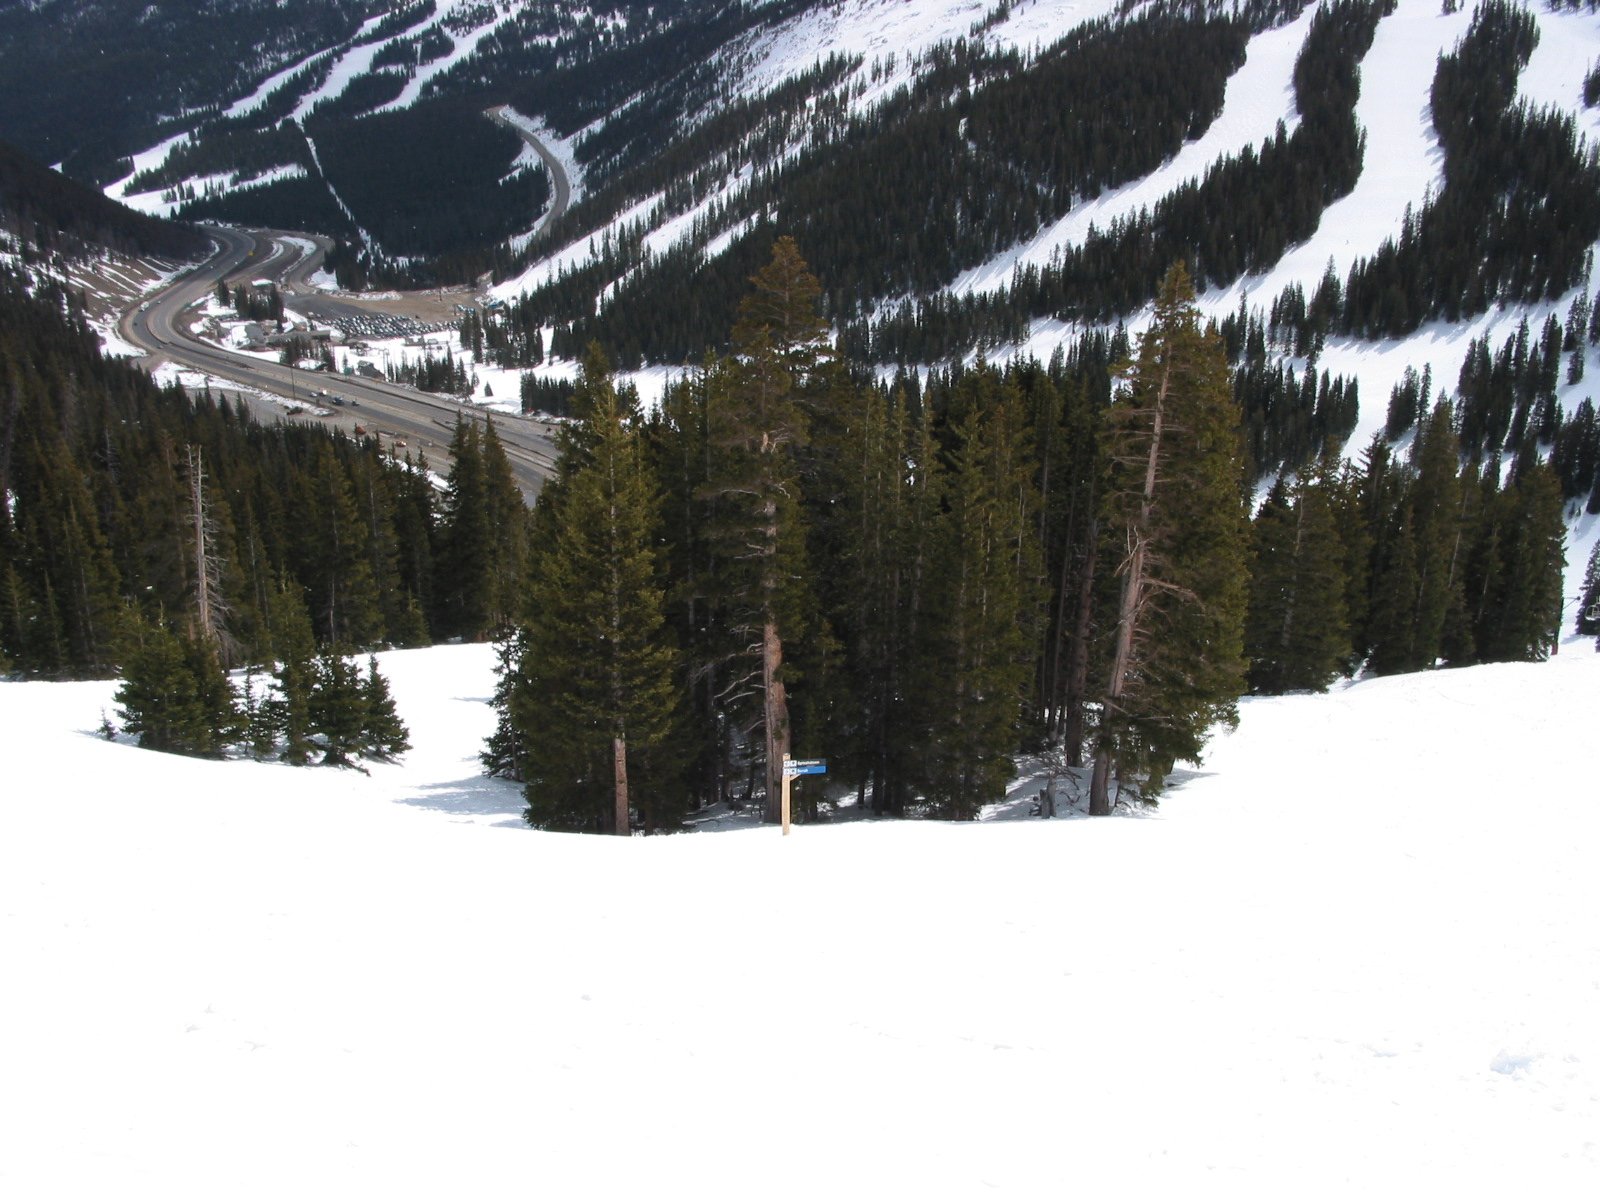 Intersection of the Scrub and Splashdown Ski Runs